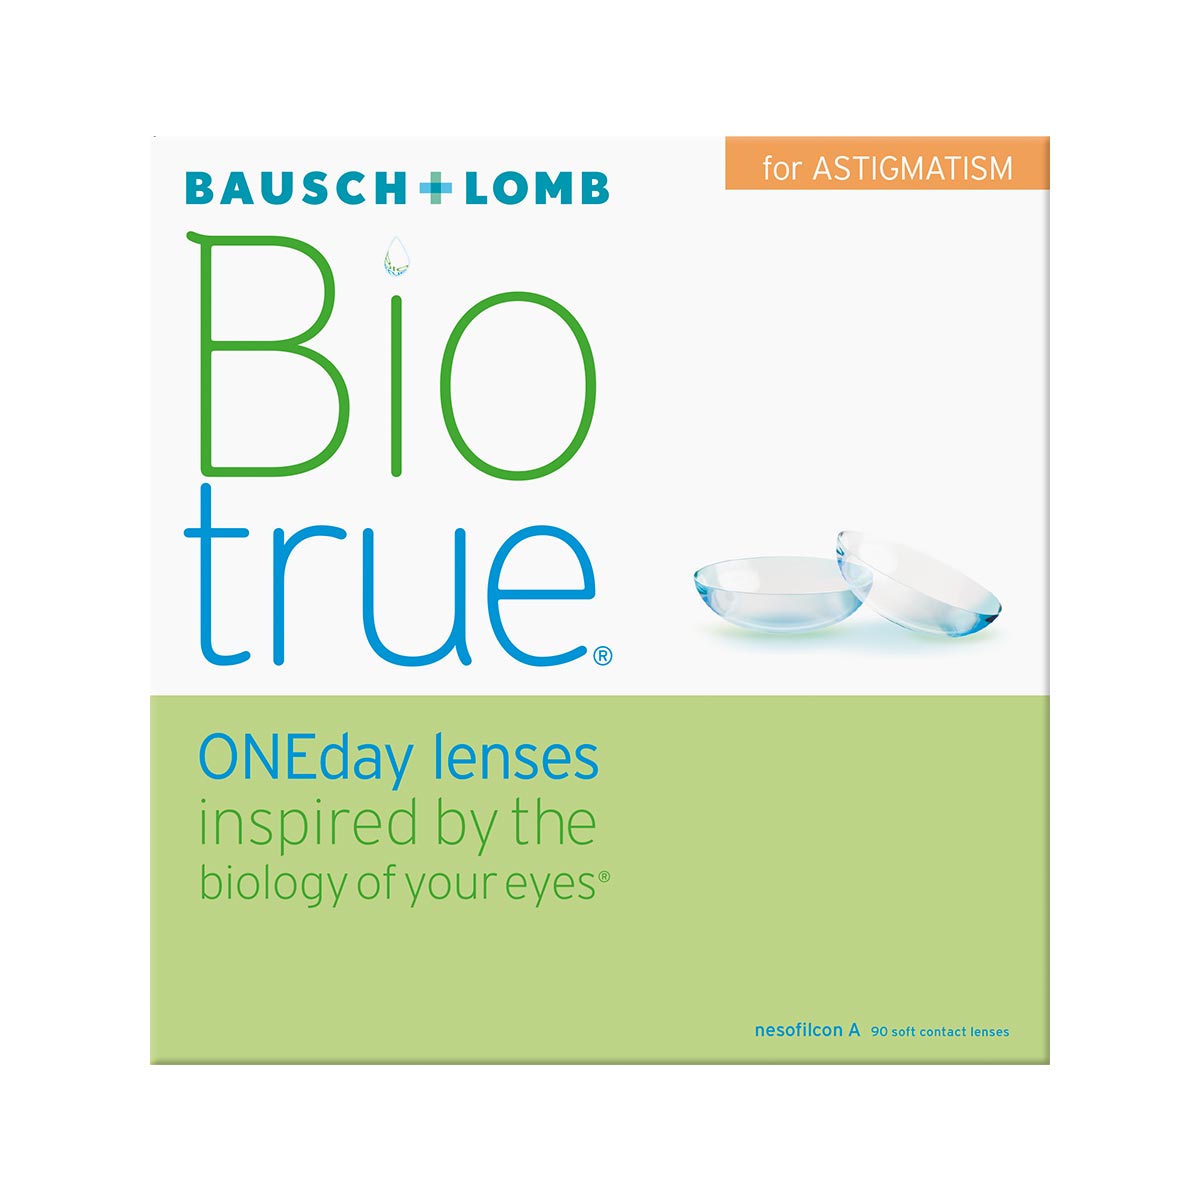 Acuvue® Oasys 1-Day for Astigmatism 30 lentes - Lentes de Contacto - Lentes de Contacto Diárias